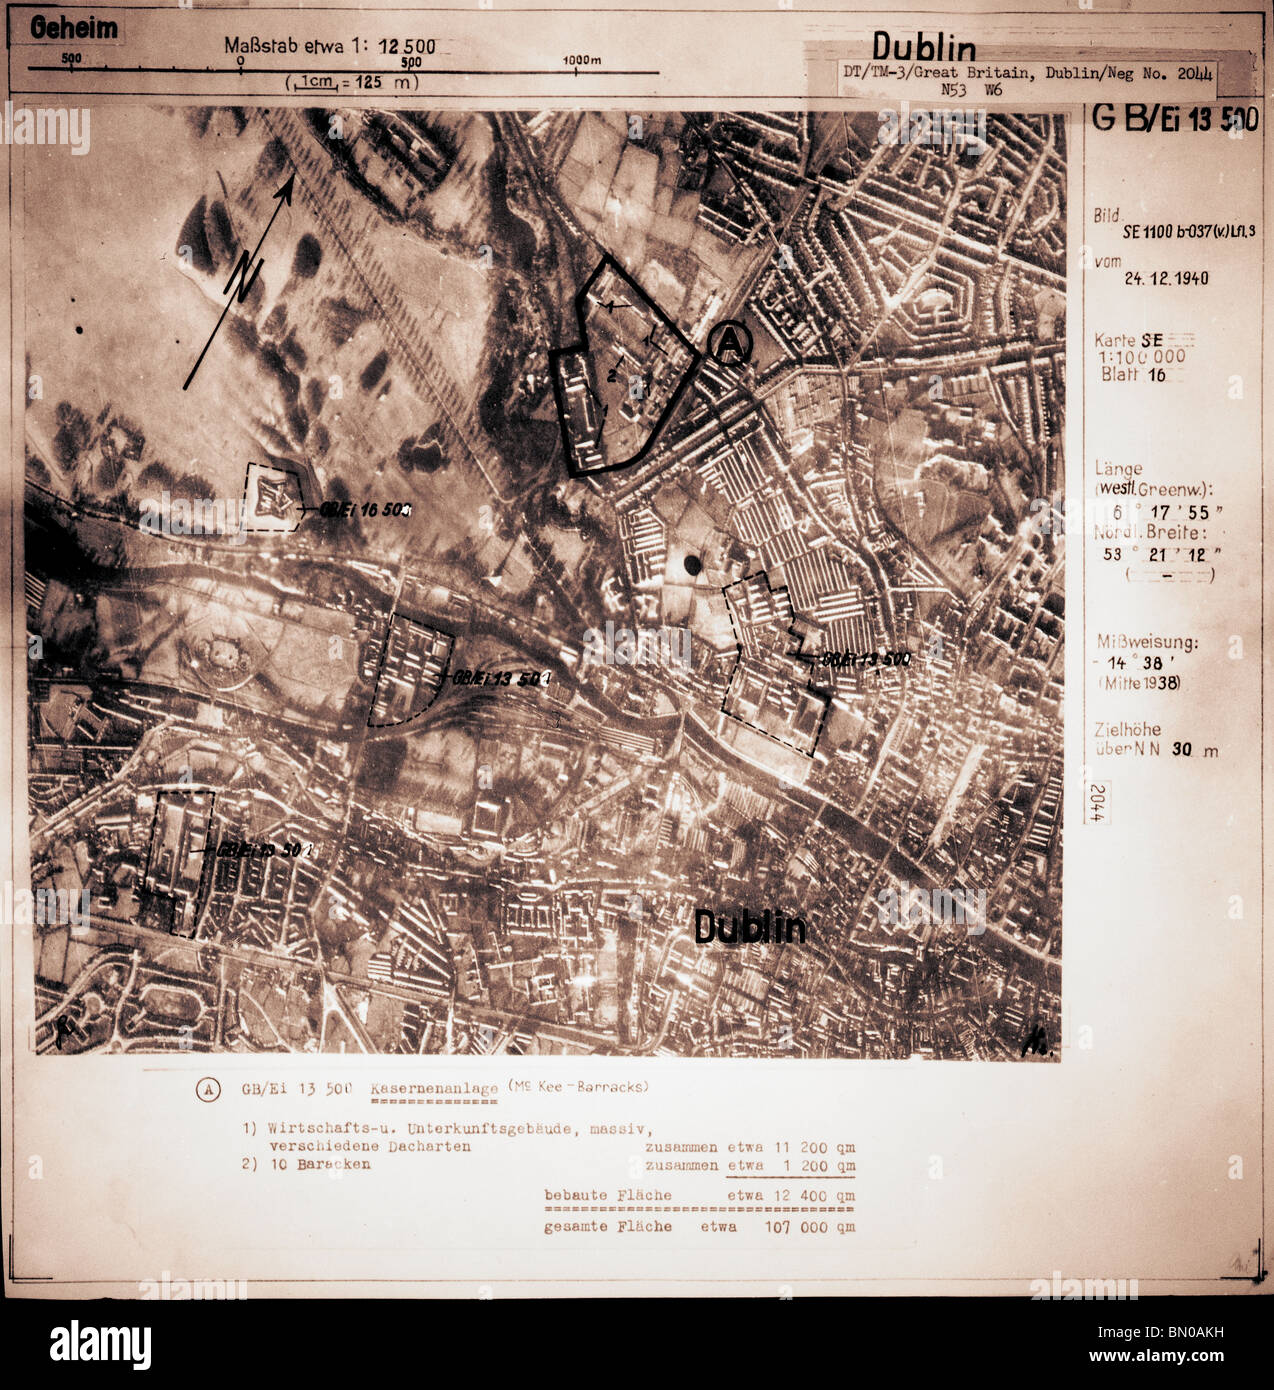 Dublin - Ireland 24th December 1940 Barracks Luftwaffe Aerial Image Stock Photo